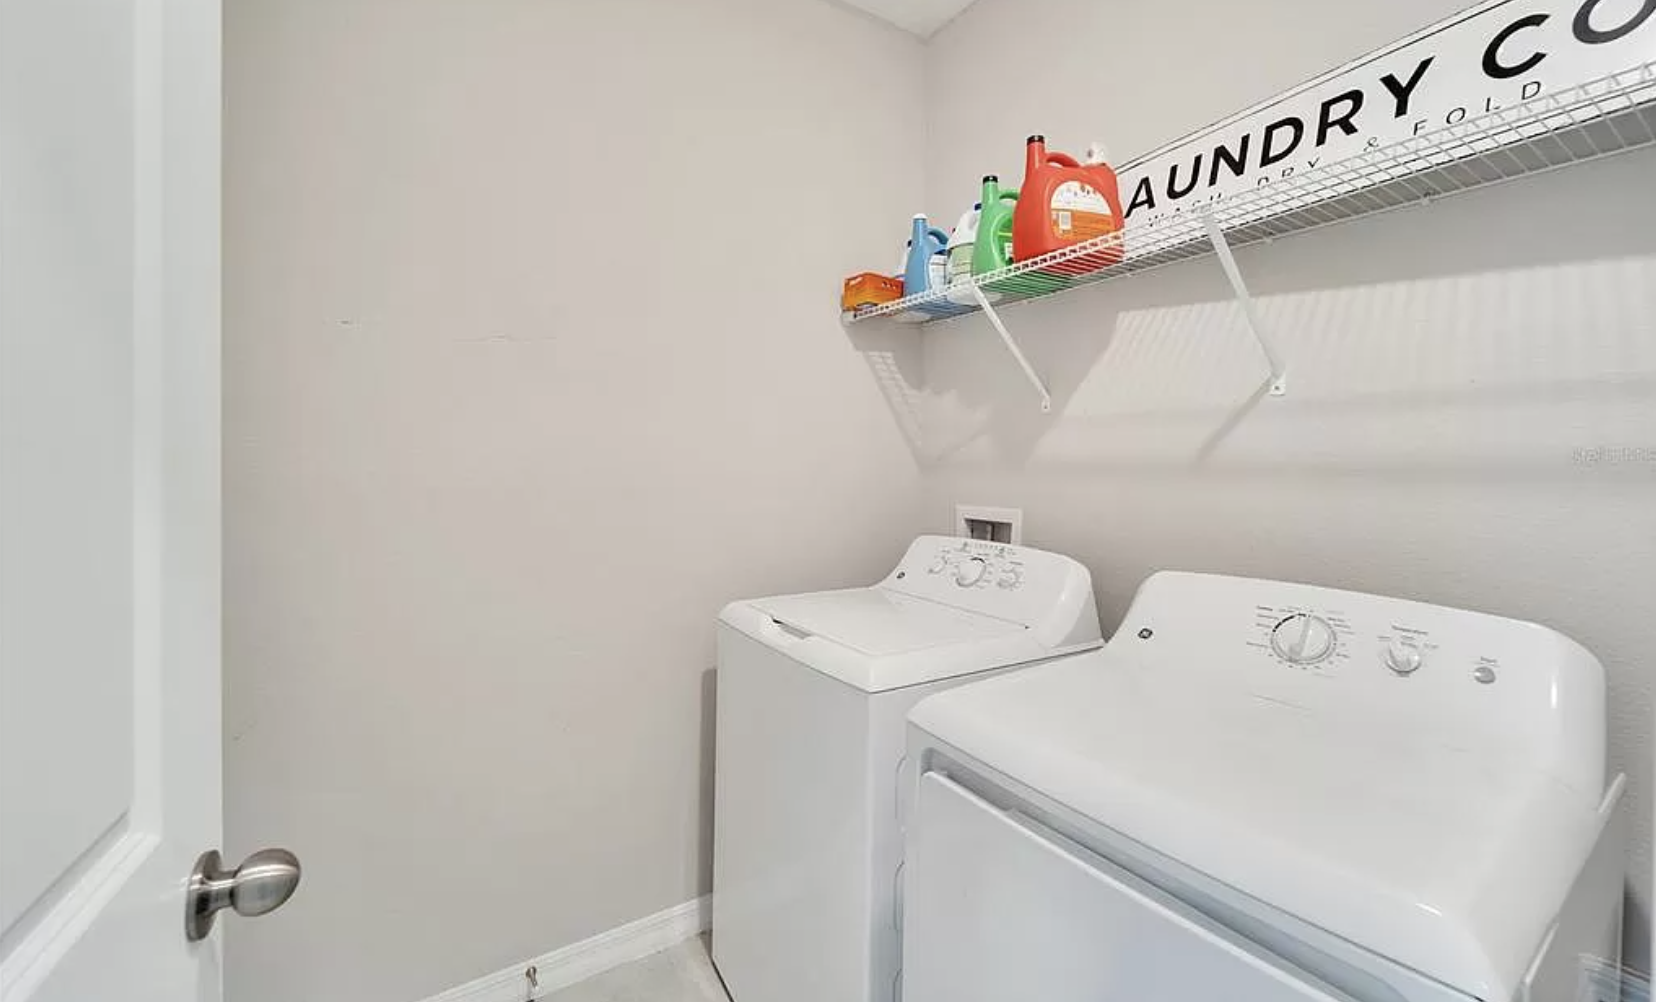 Super Easy Laundry Room Update for Under $300